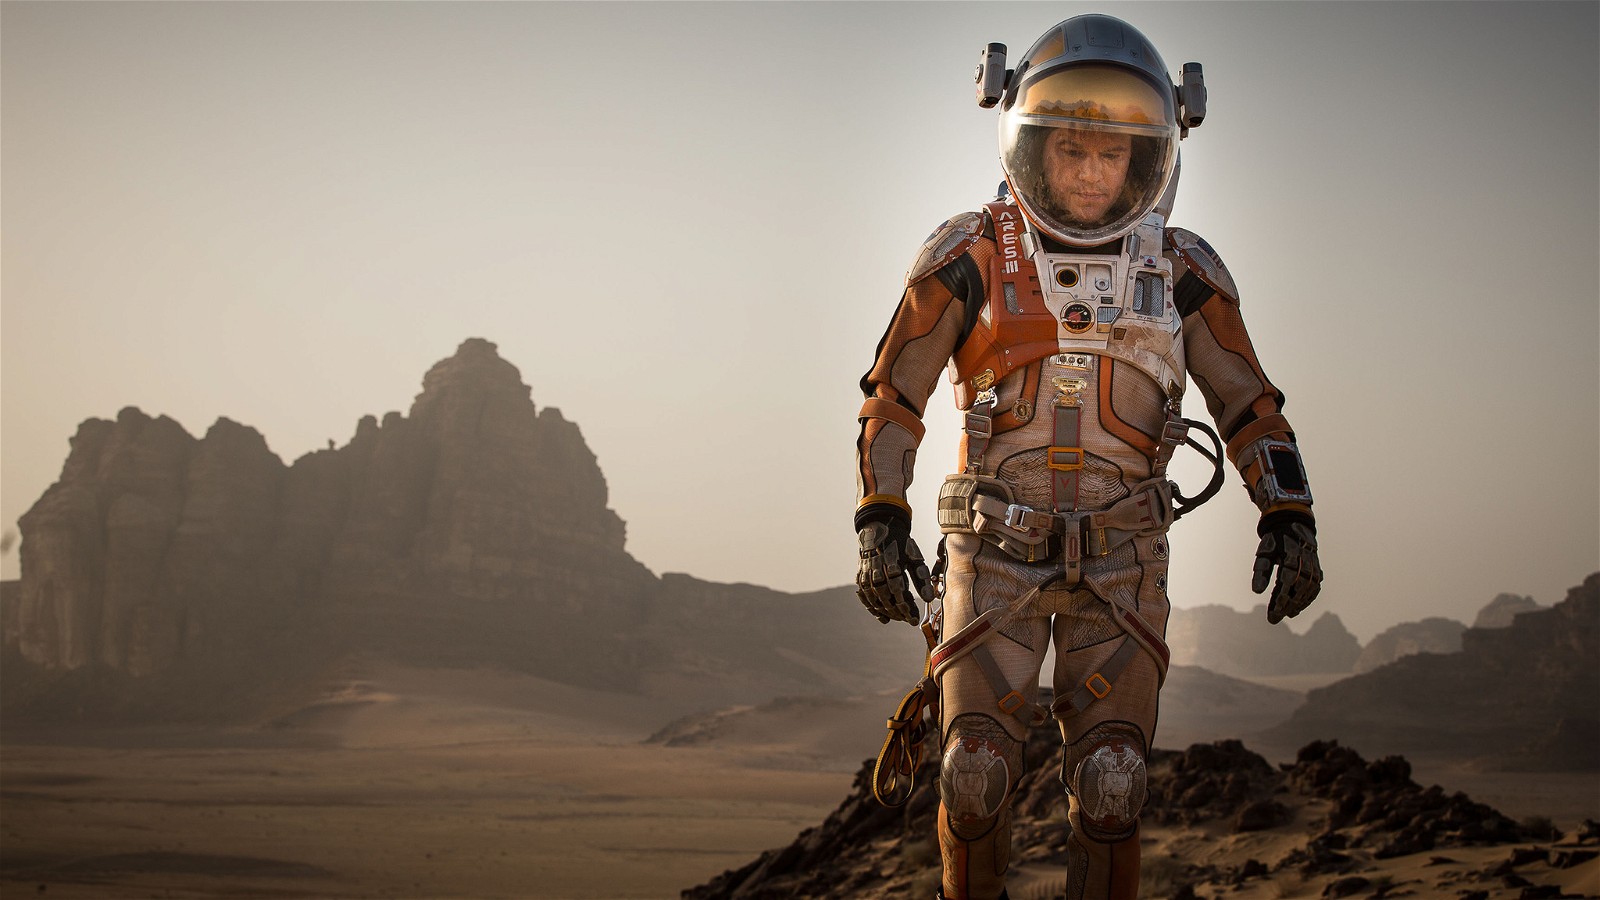 Matt Damon as Mark Watney in Ridley Scott's The Martian | 20th Century Fox